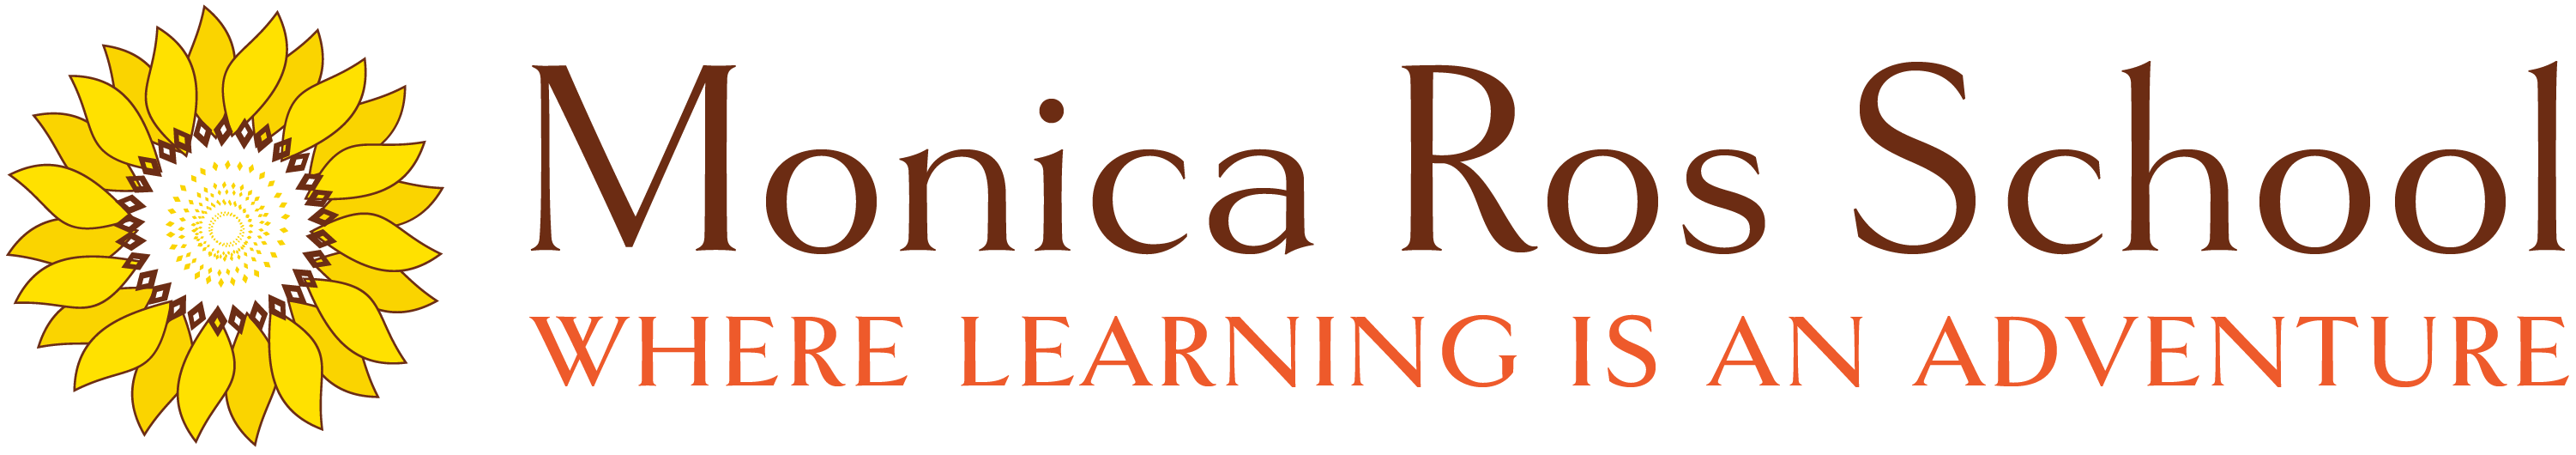 Monica Ros School logo